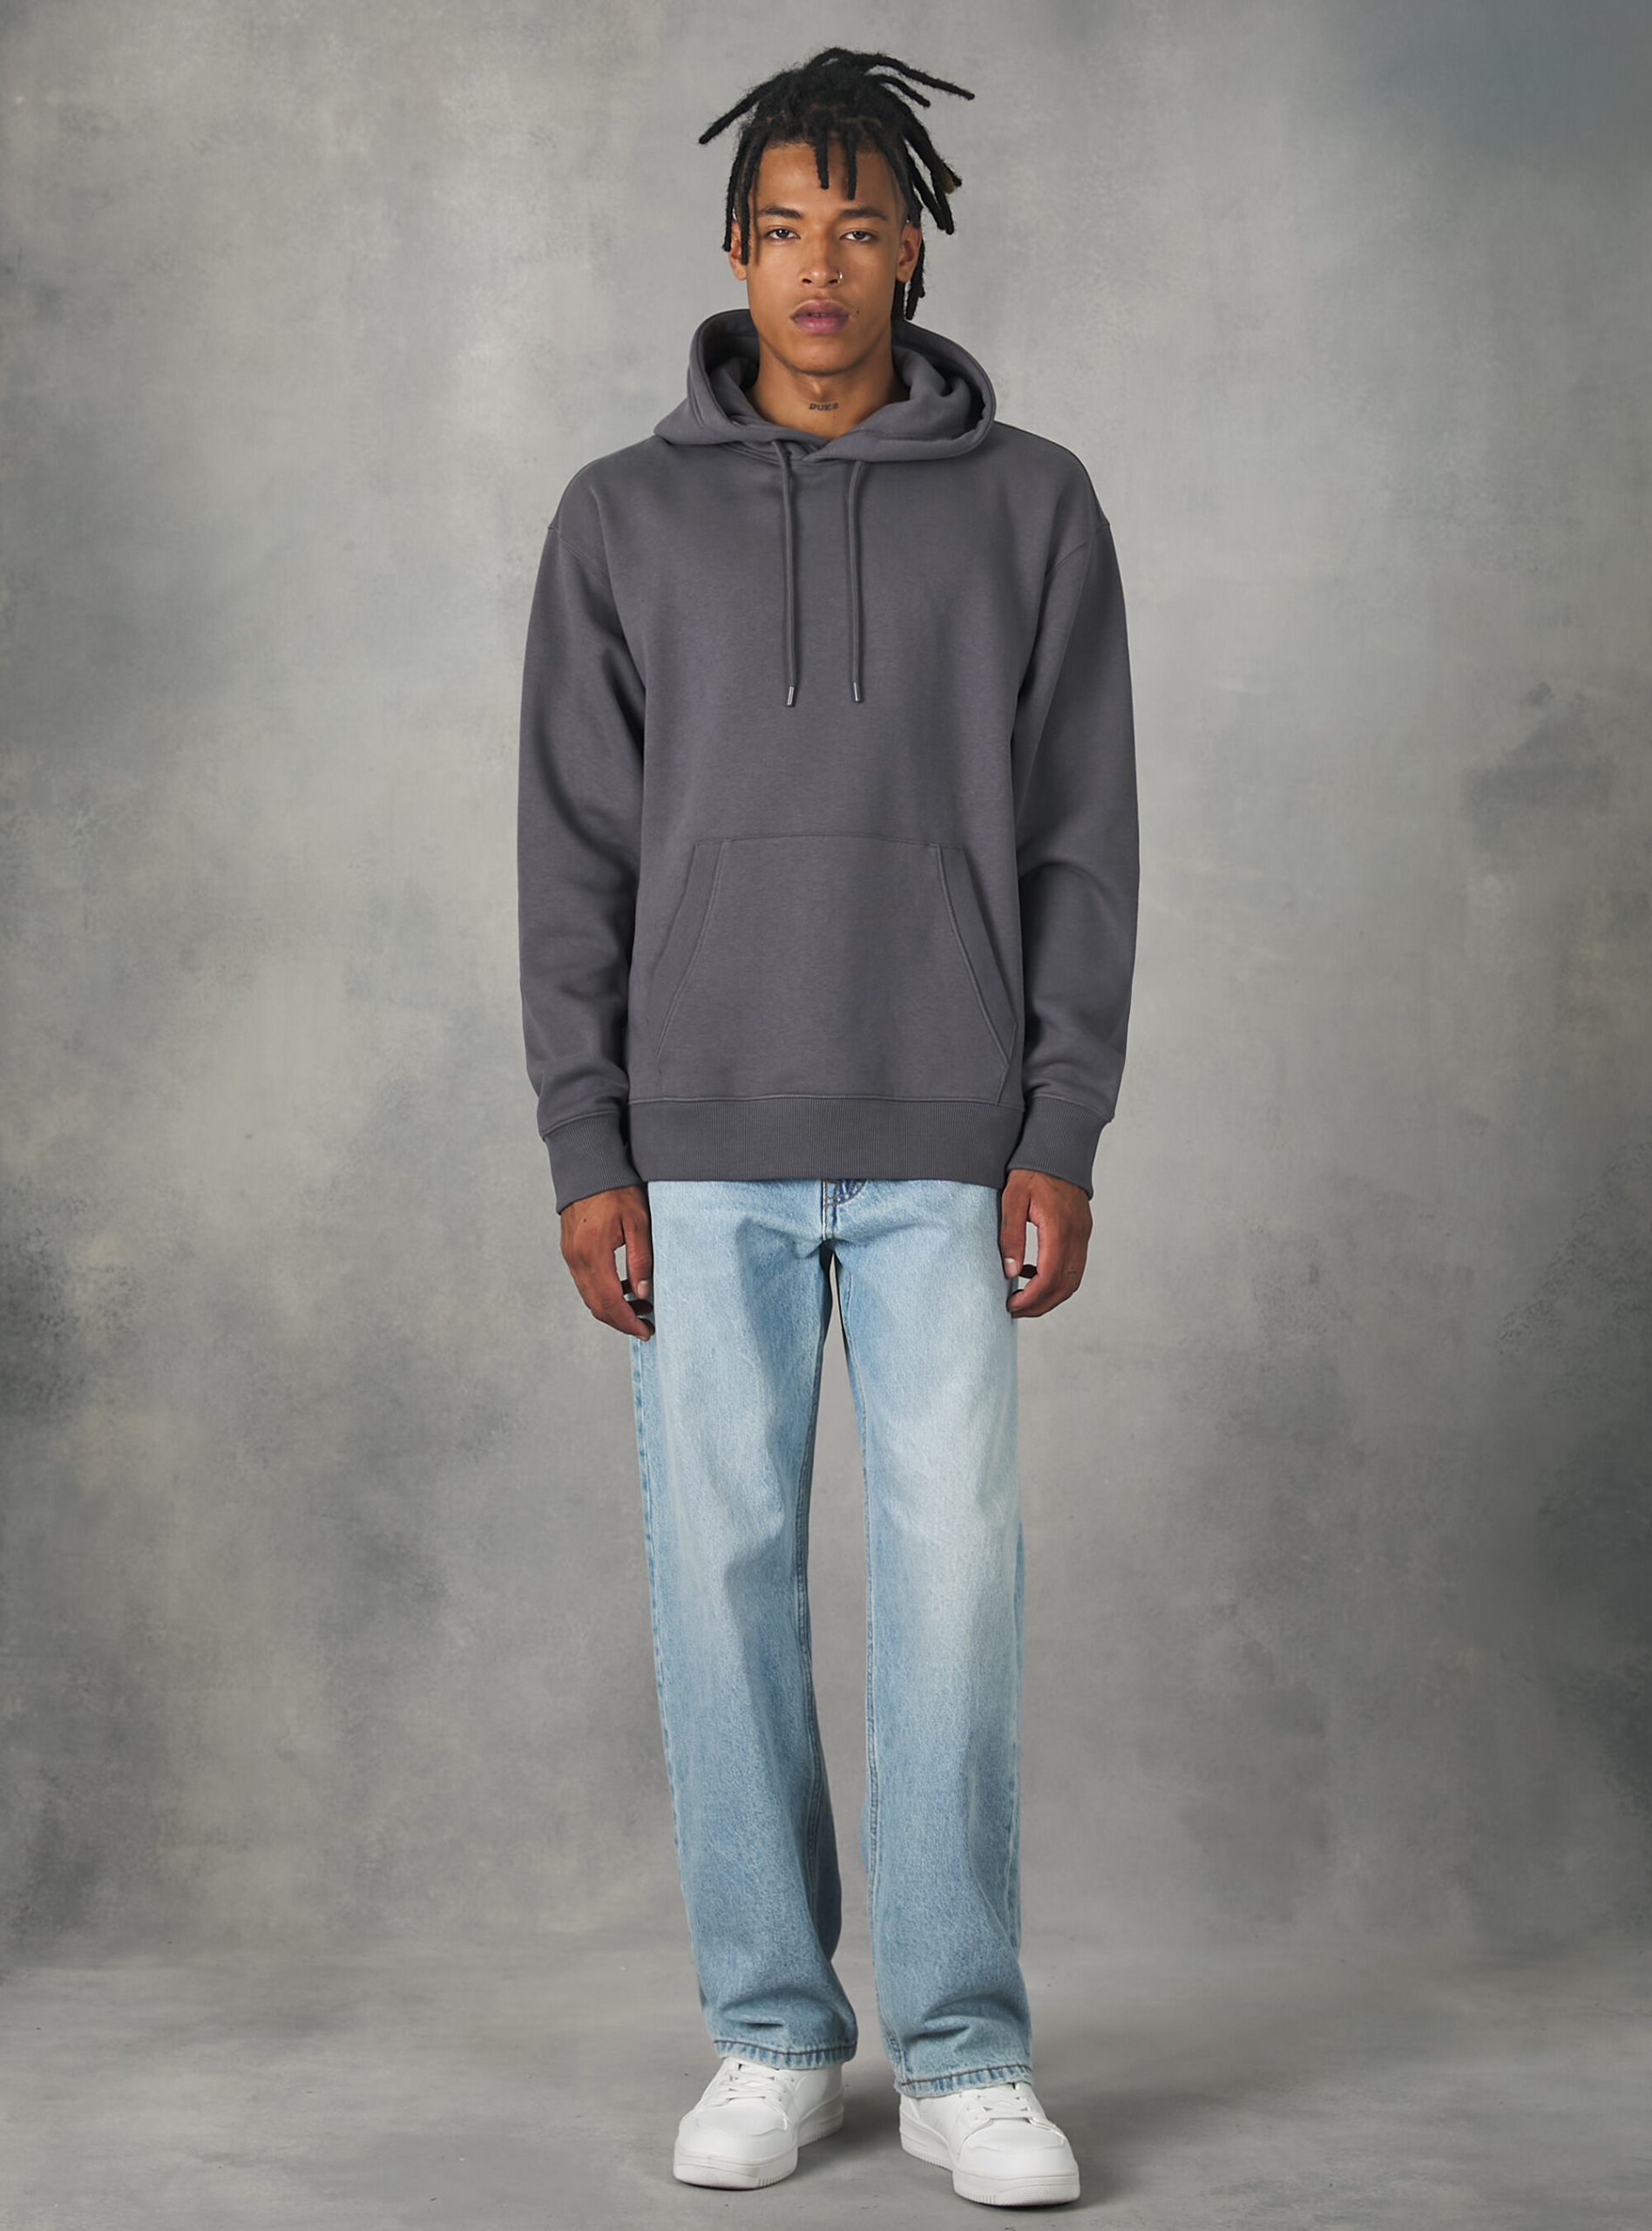 Alcott Männer Sweatshirts Marke Gy1 Grey Dark Sweatshirt With Hood And Pouch Pocket – 1